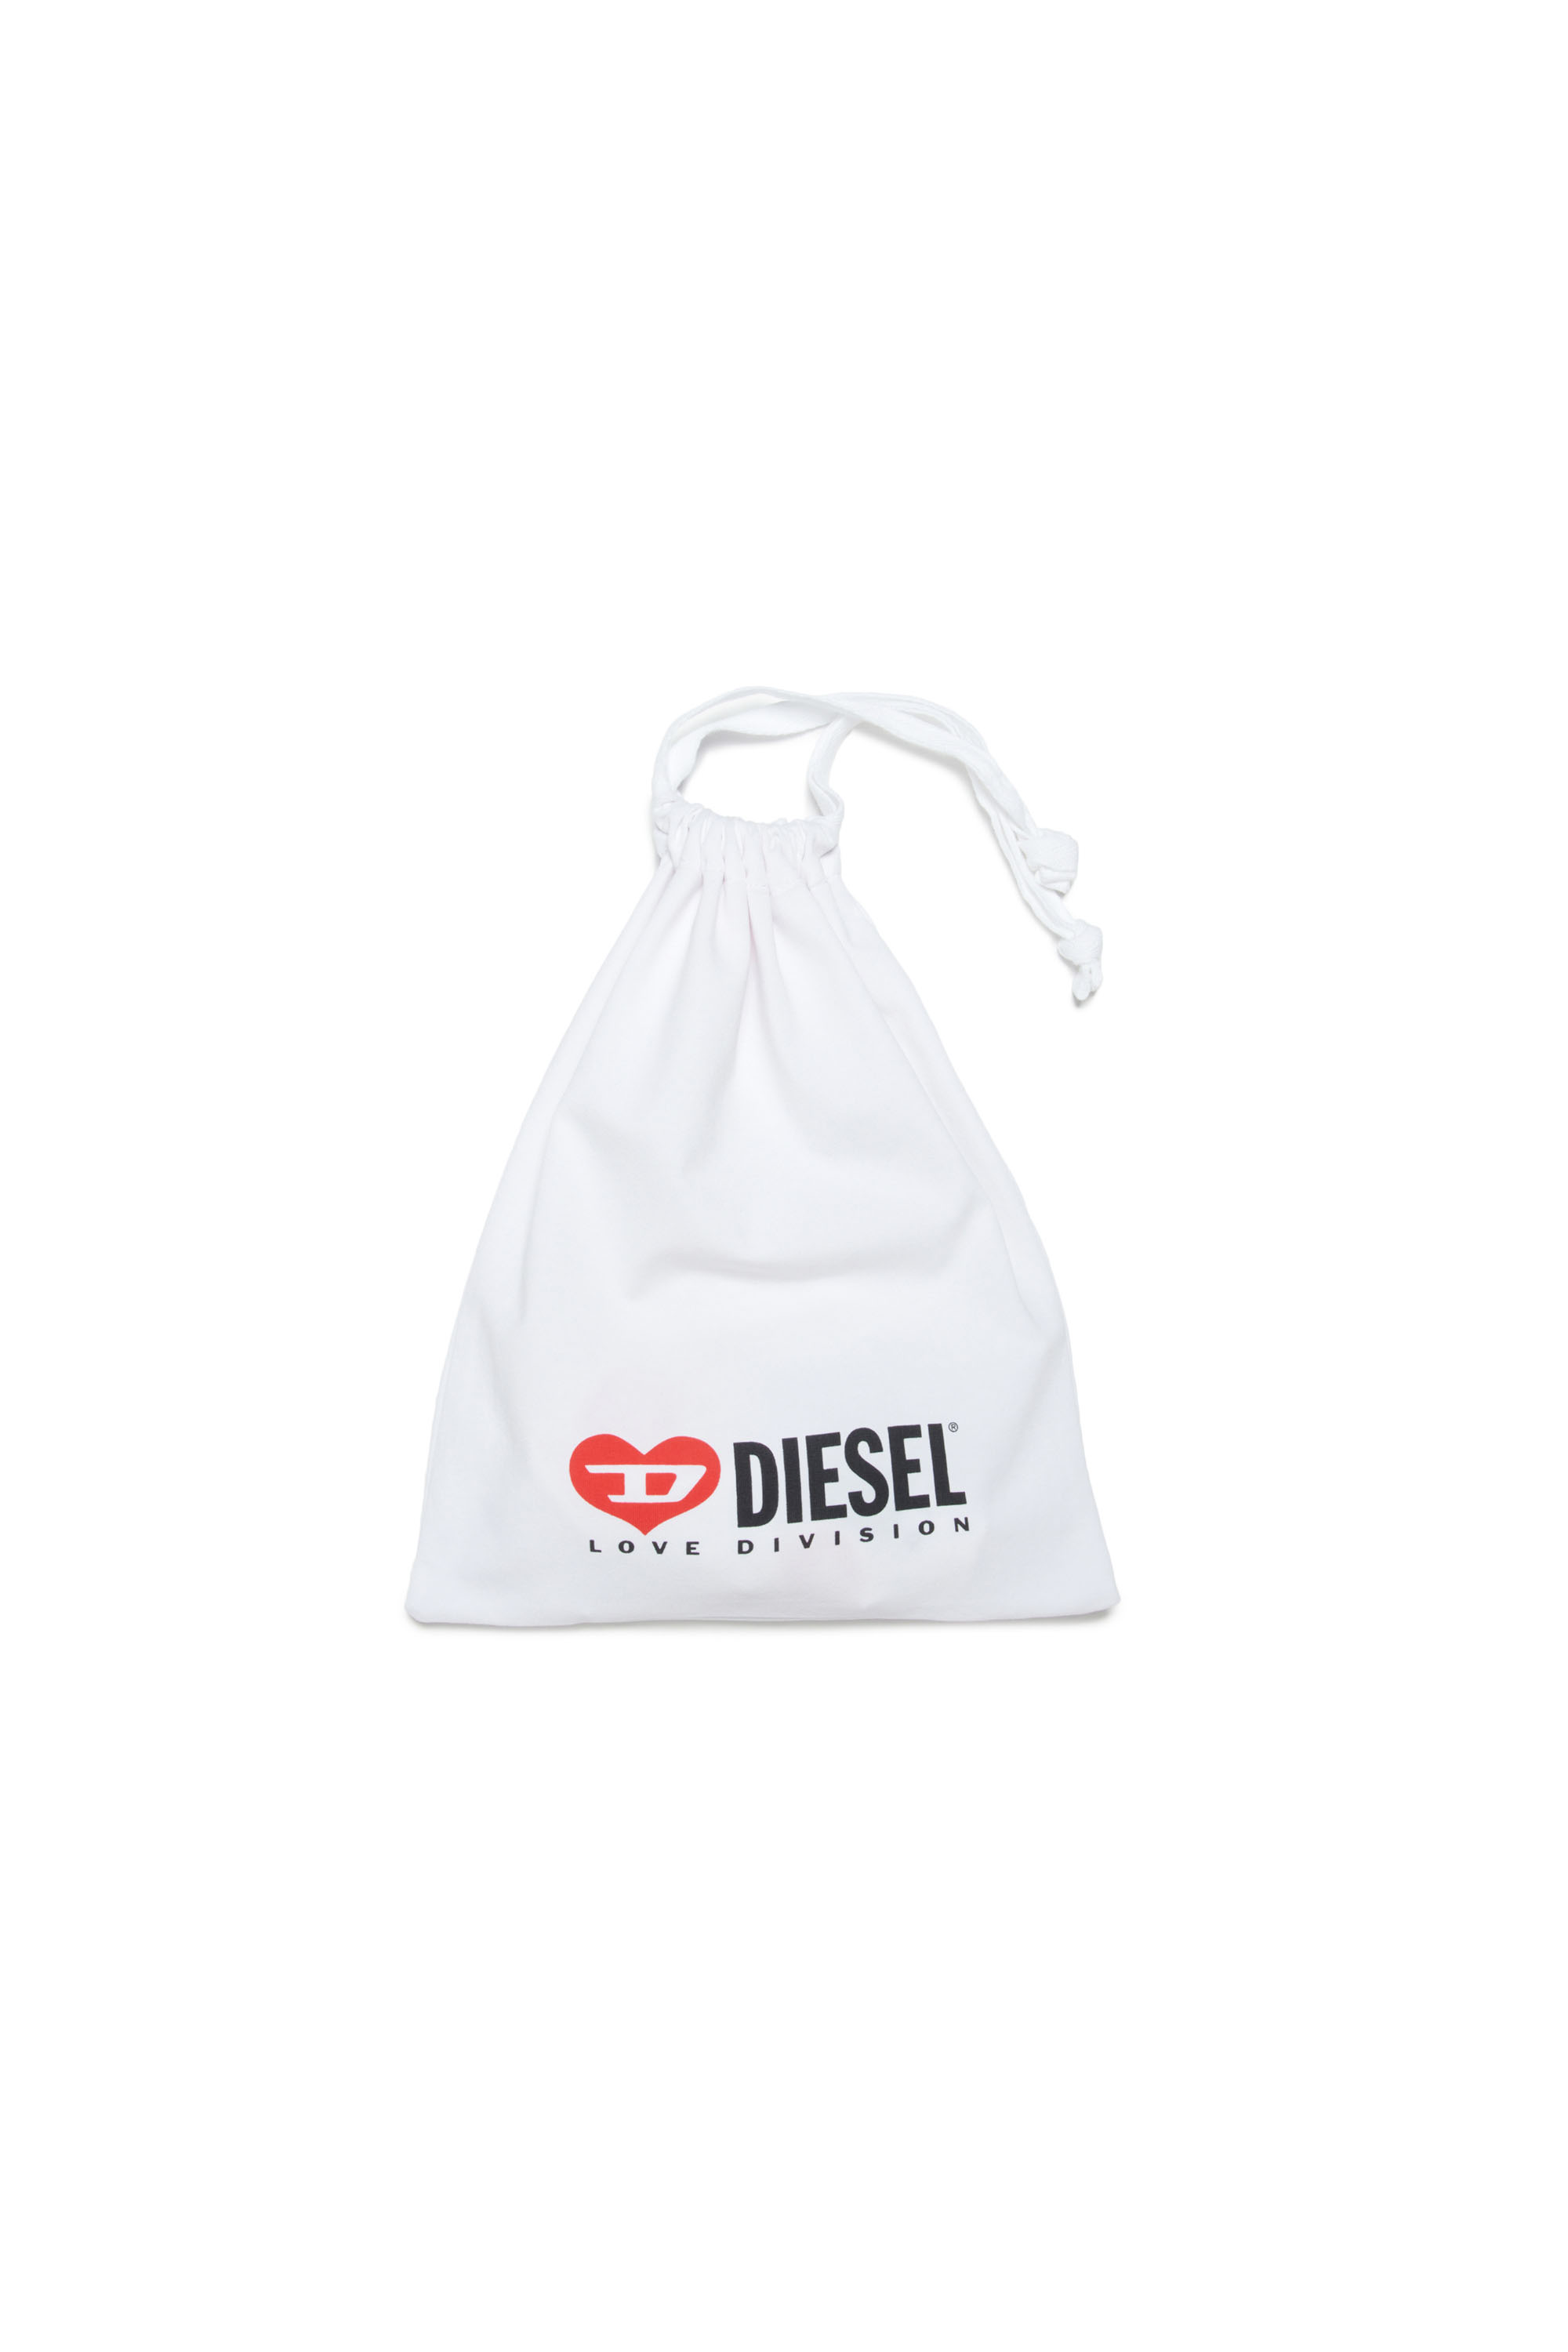 Diesel - ULOVE-NB, Bianco - Image 4